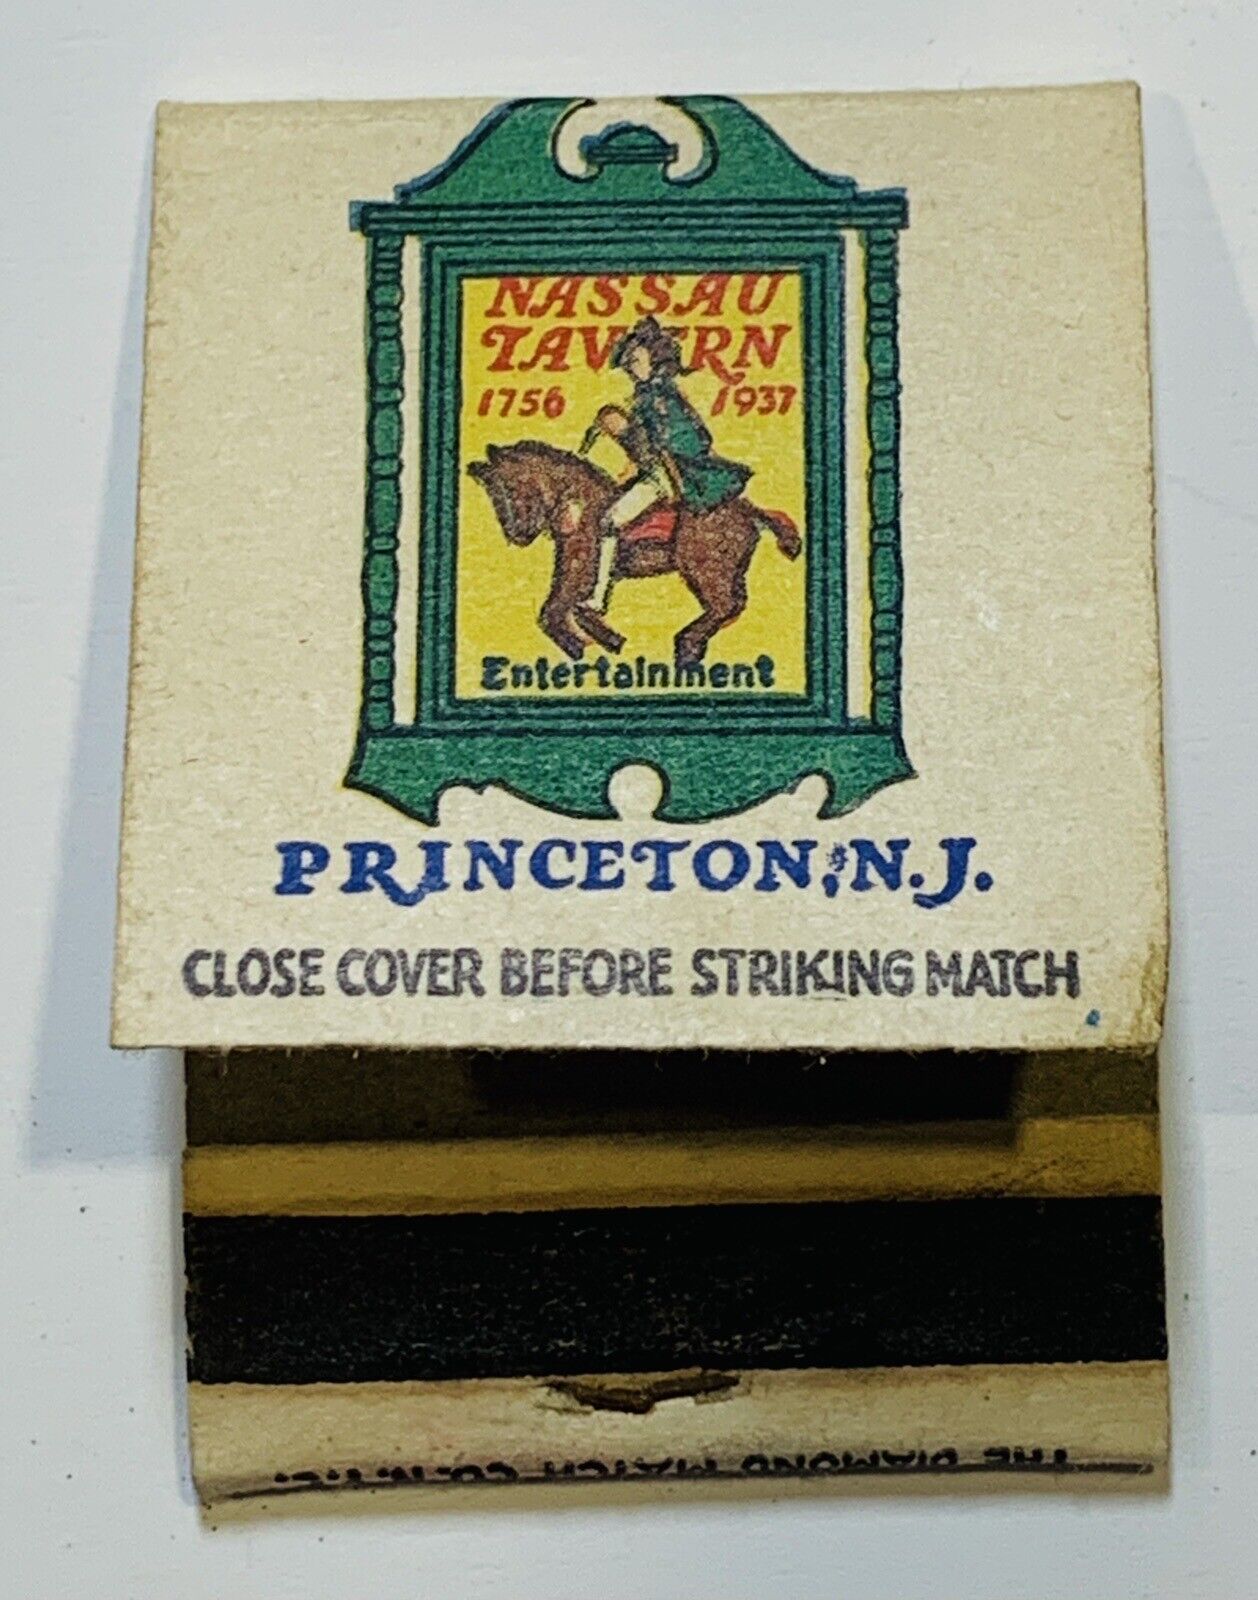 1937 MATCHBOOK: Nassau Tavern - Princeton, NJ - Diamond Match Co